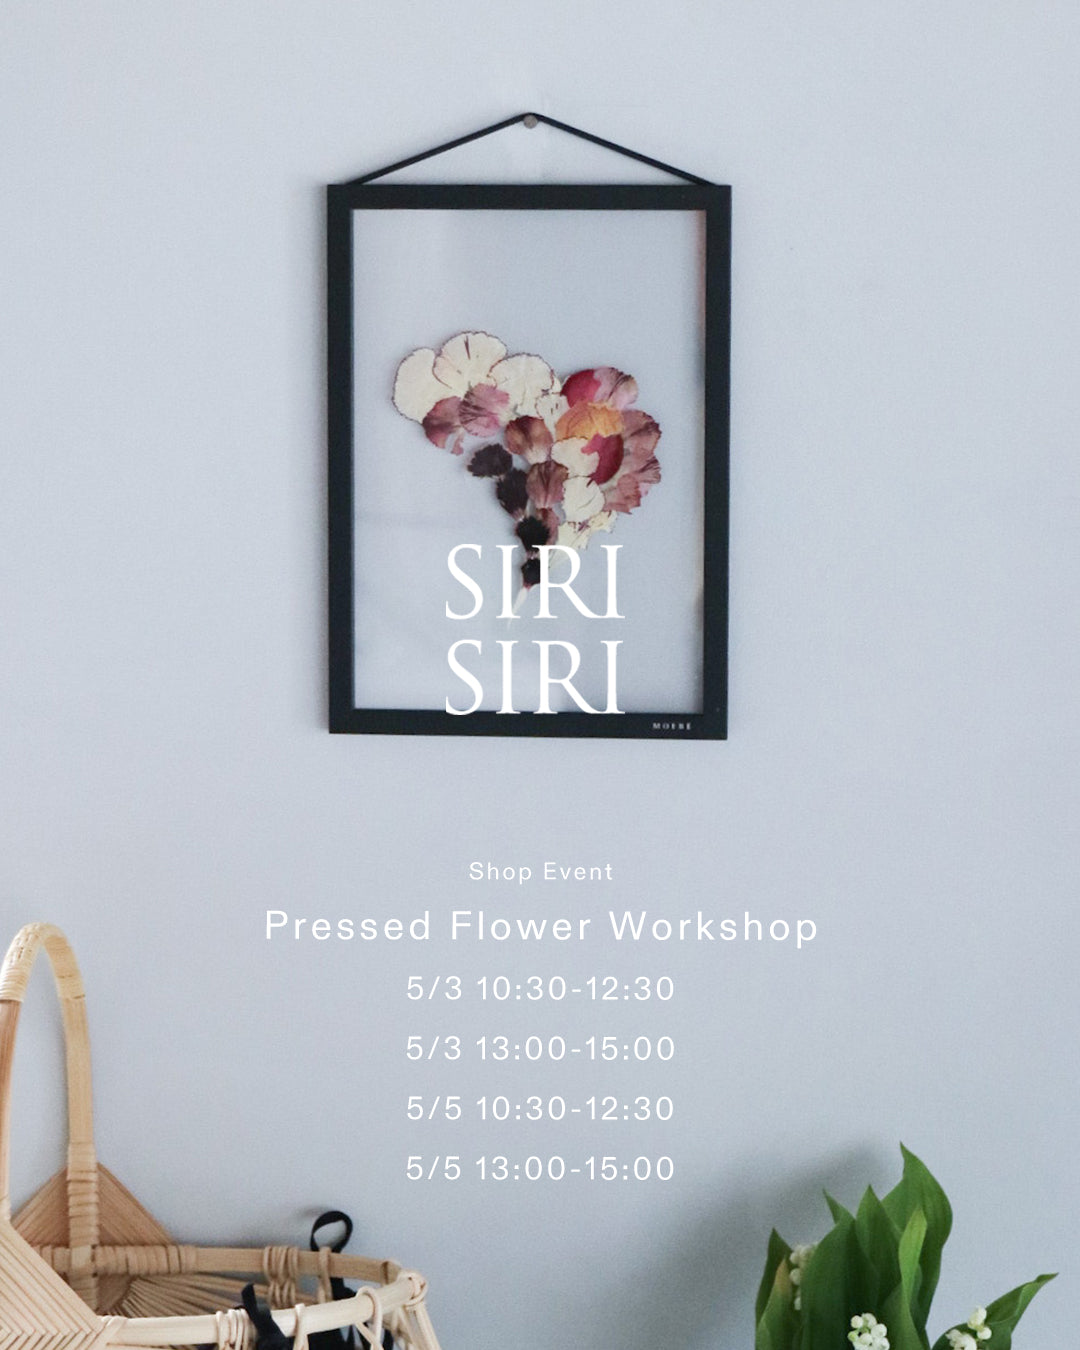 [Announcement of Pressed Flower Workshop]